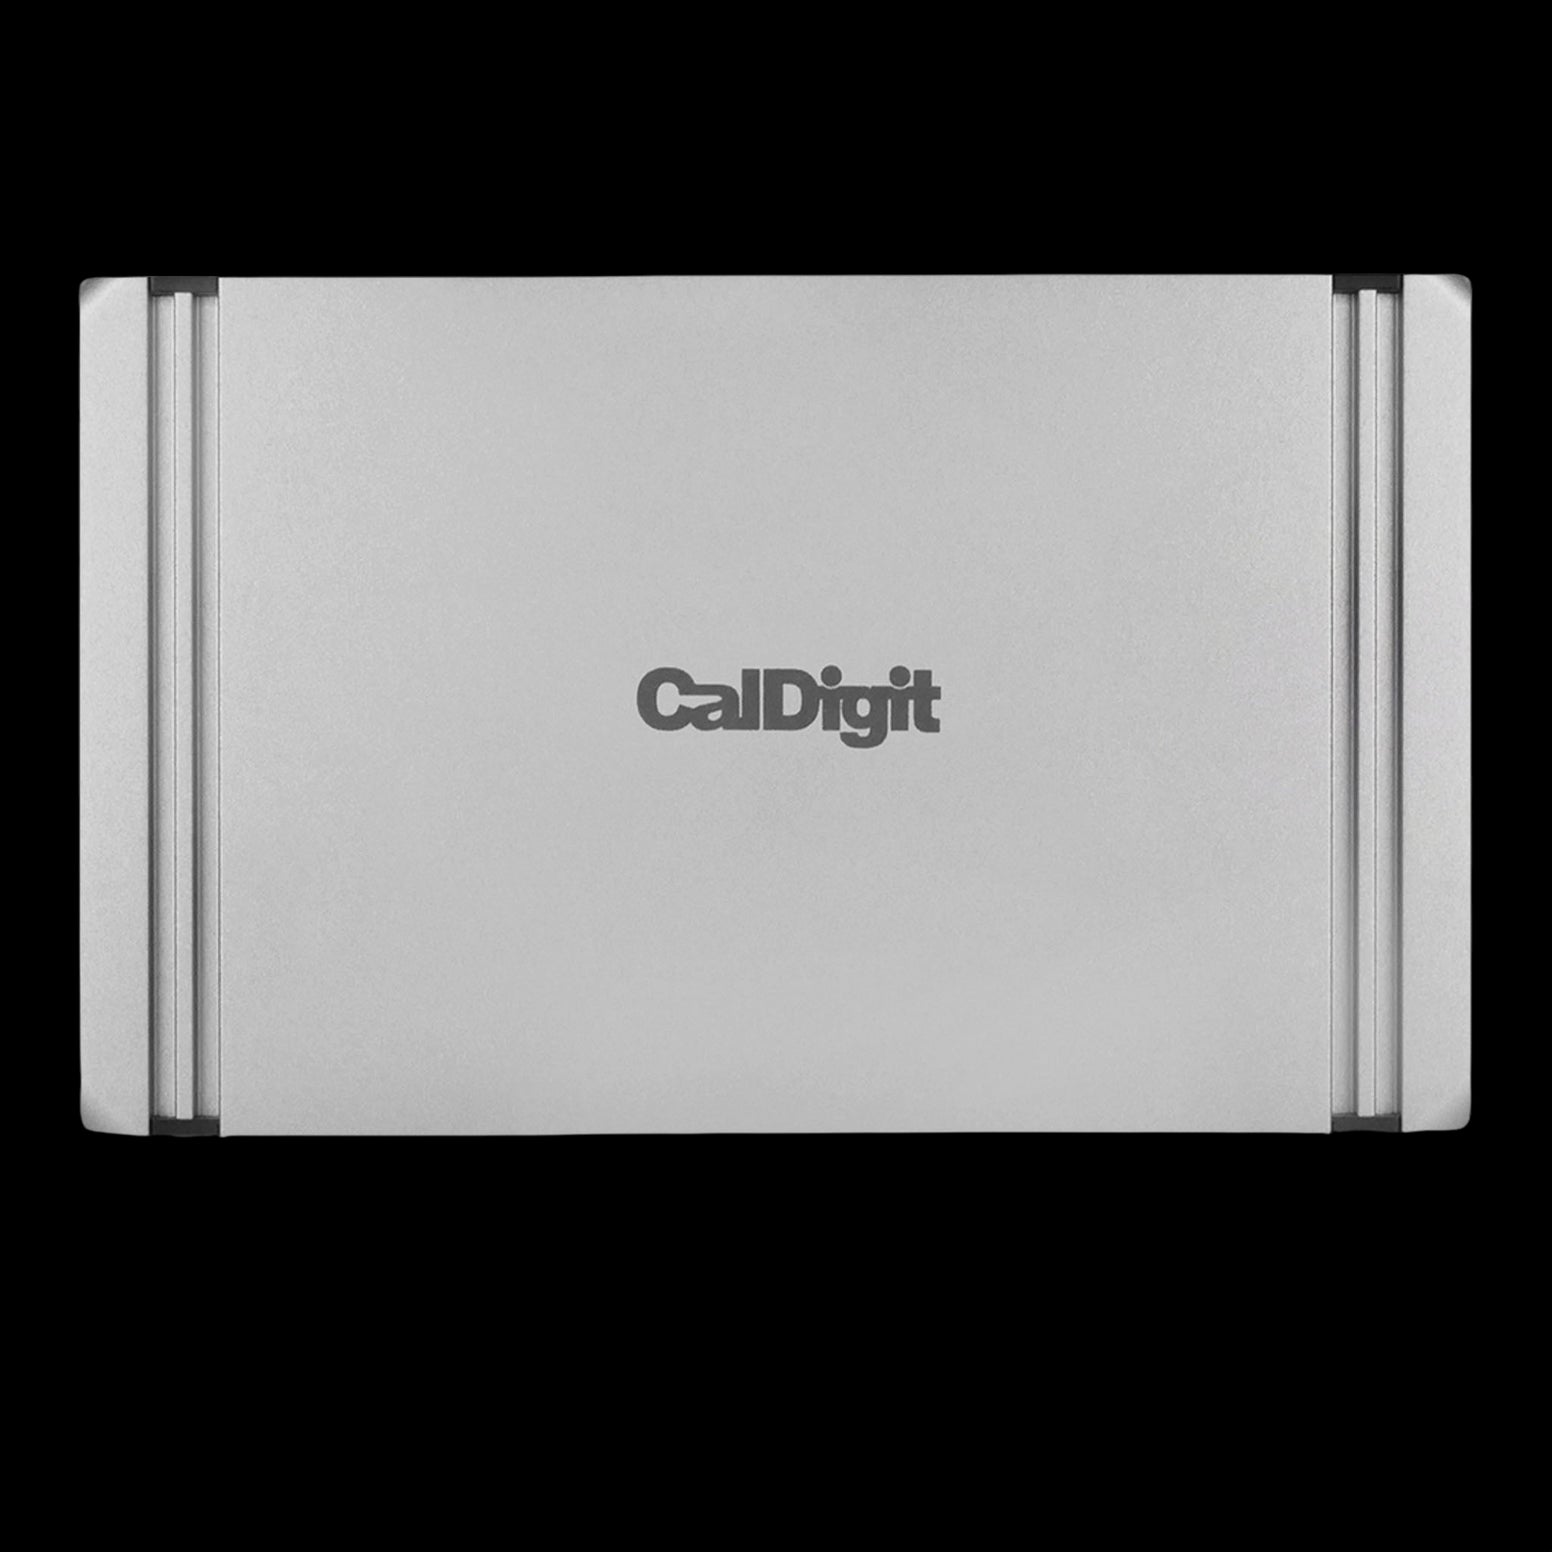 CalDigit Thunderbolt 4 Element Hub